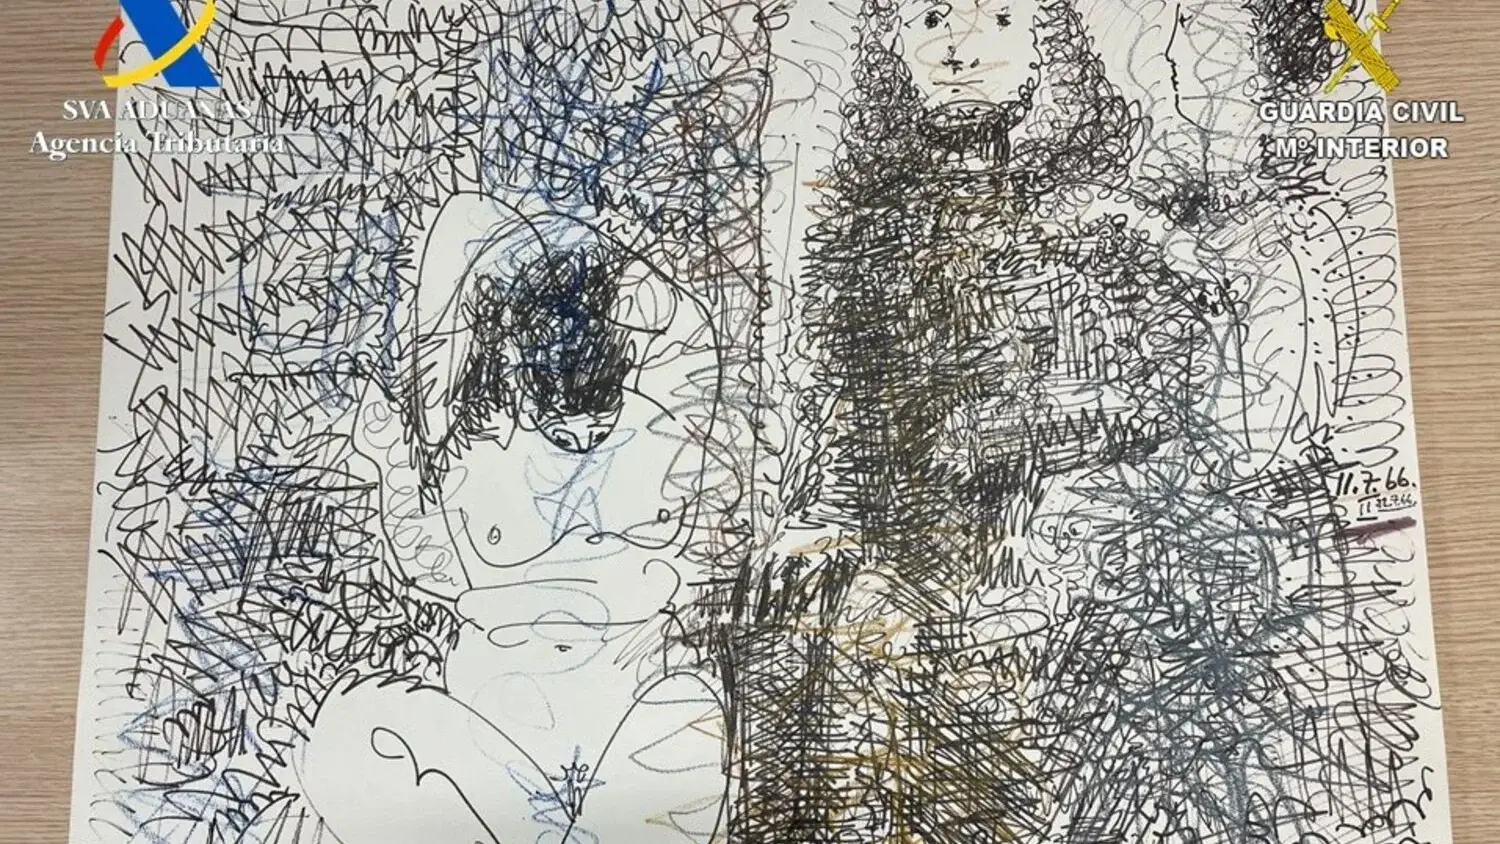 Desenho de Picasso de 450 mil euros apreendido na alfândega no aeroporto de Ibiza